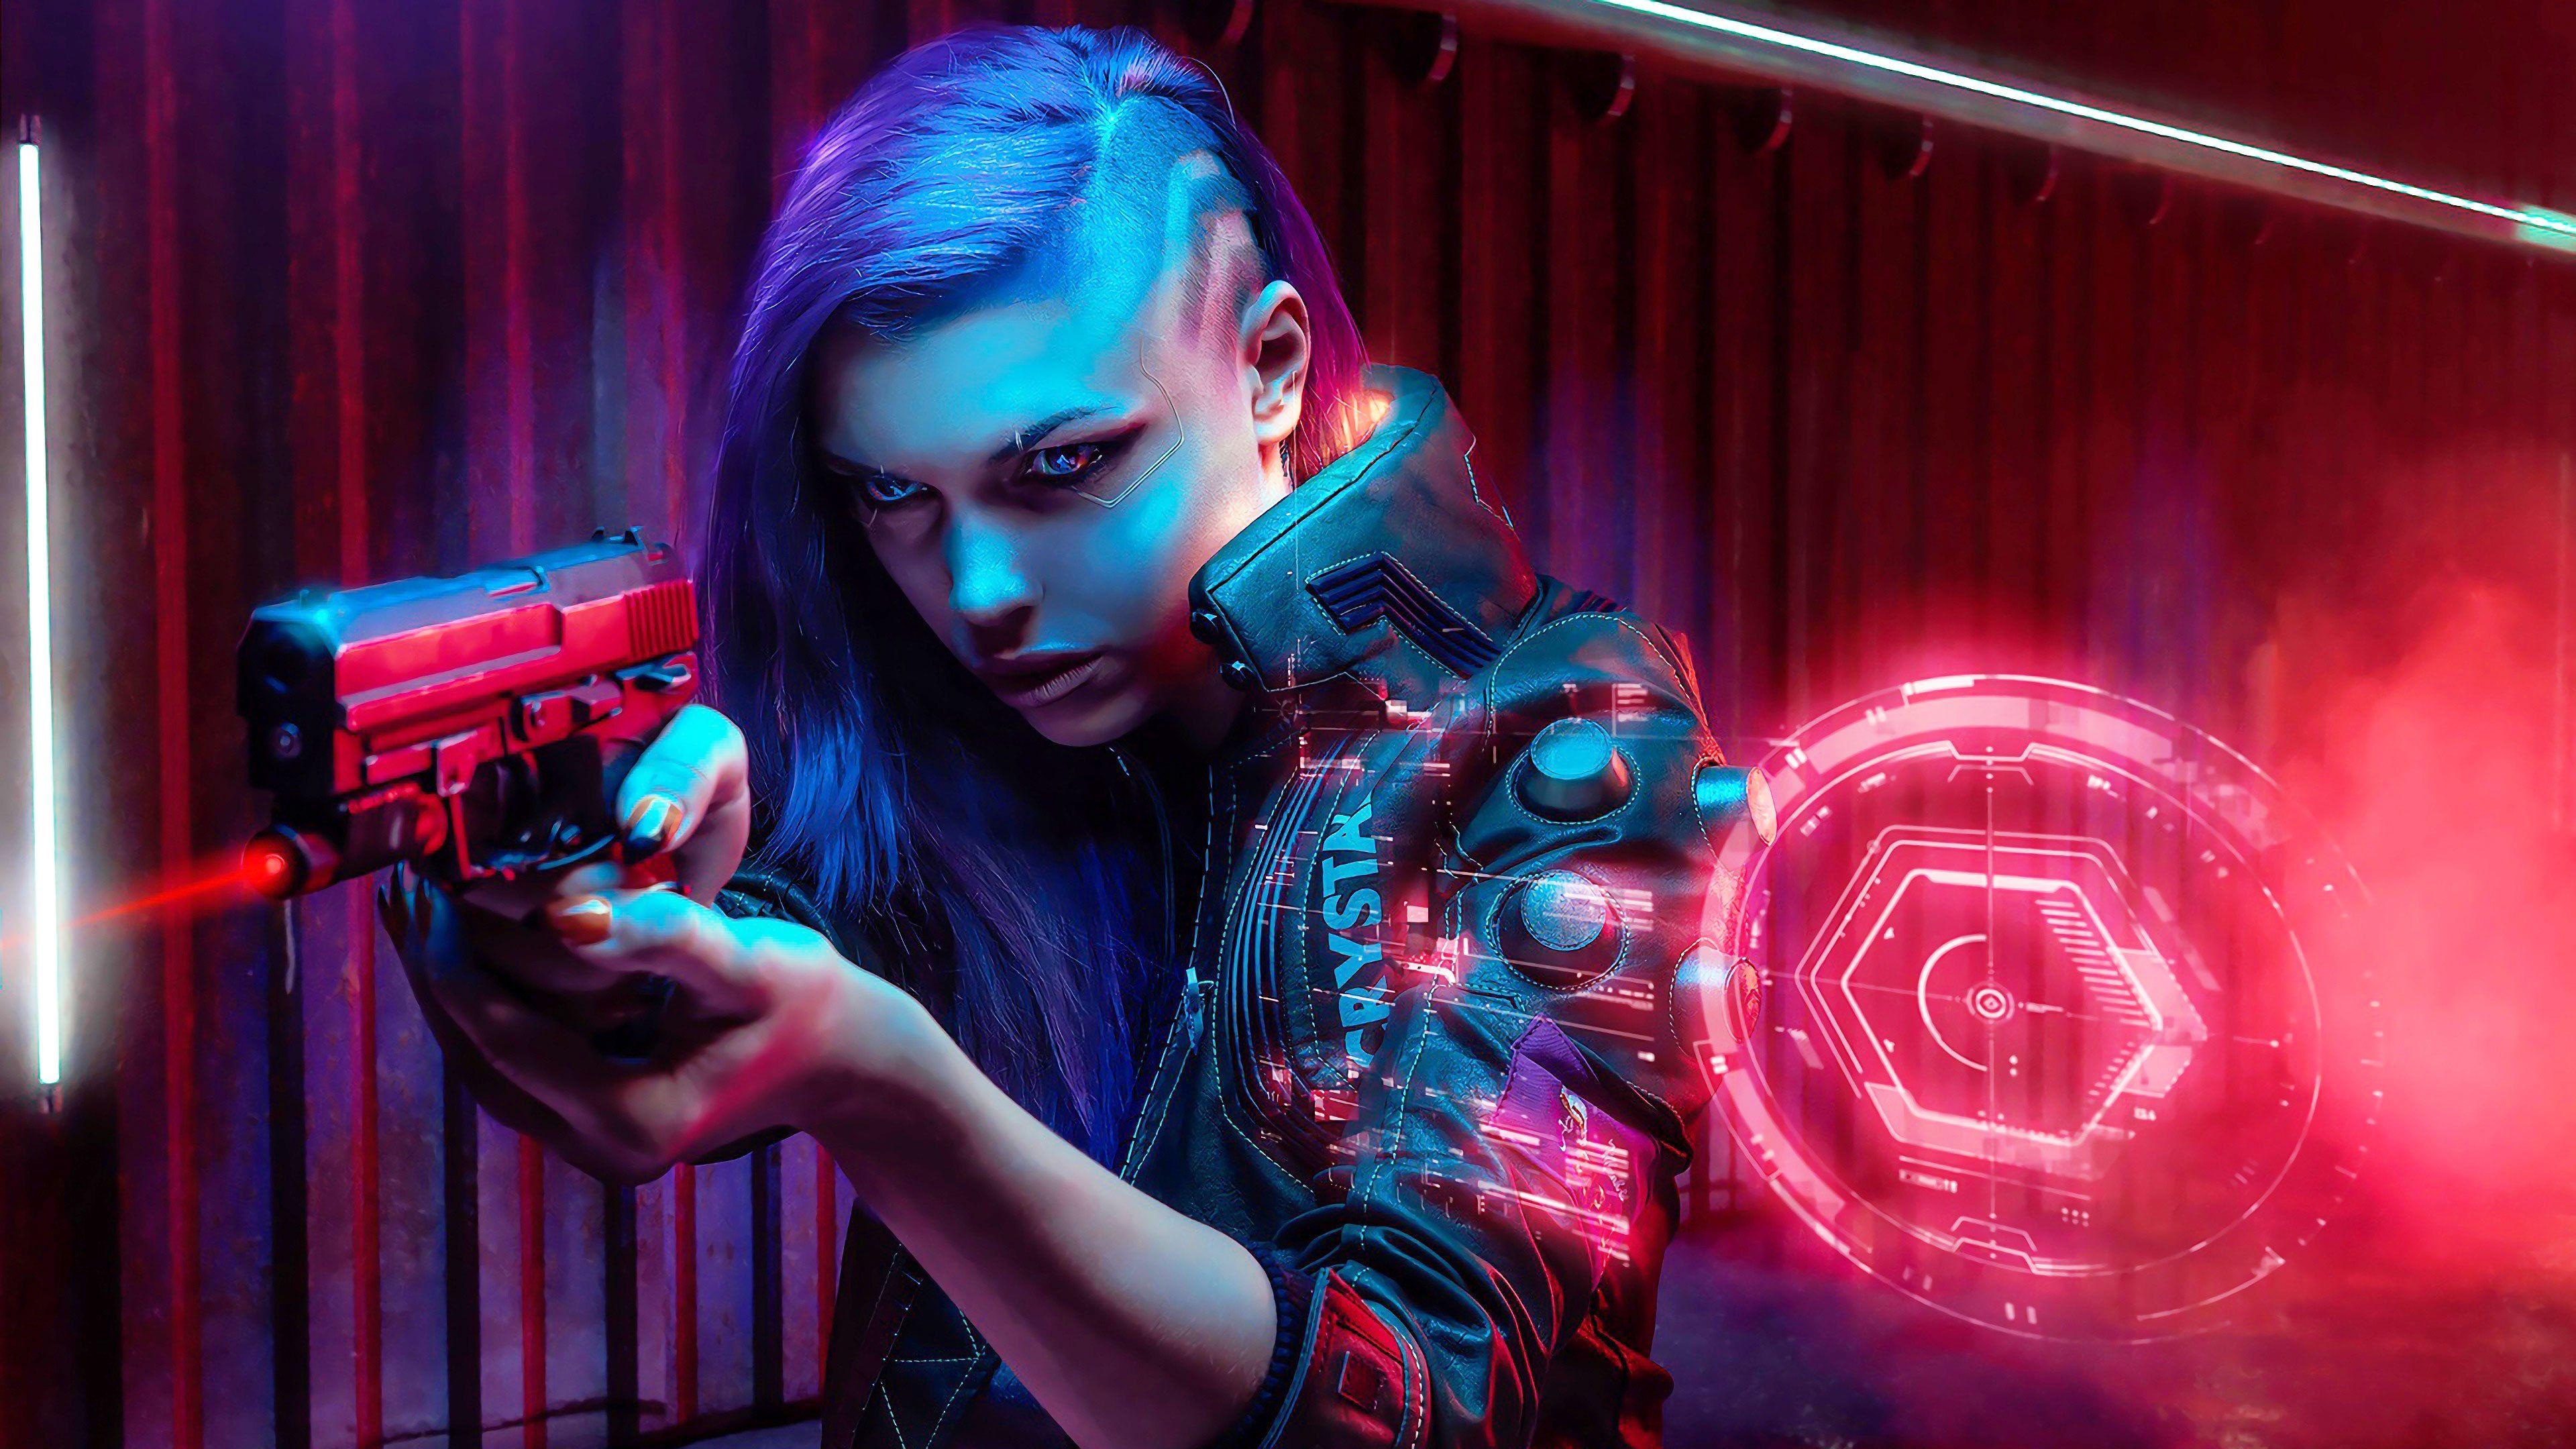 Cyberpunk 2020 Wallpapers - Top Free Cyberpunk 2020 ...